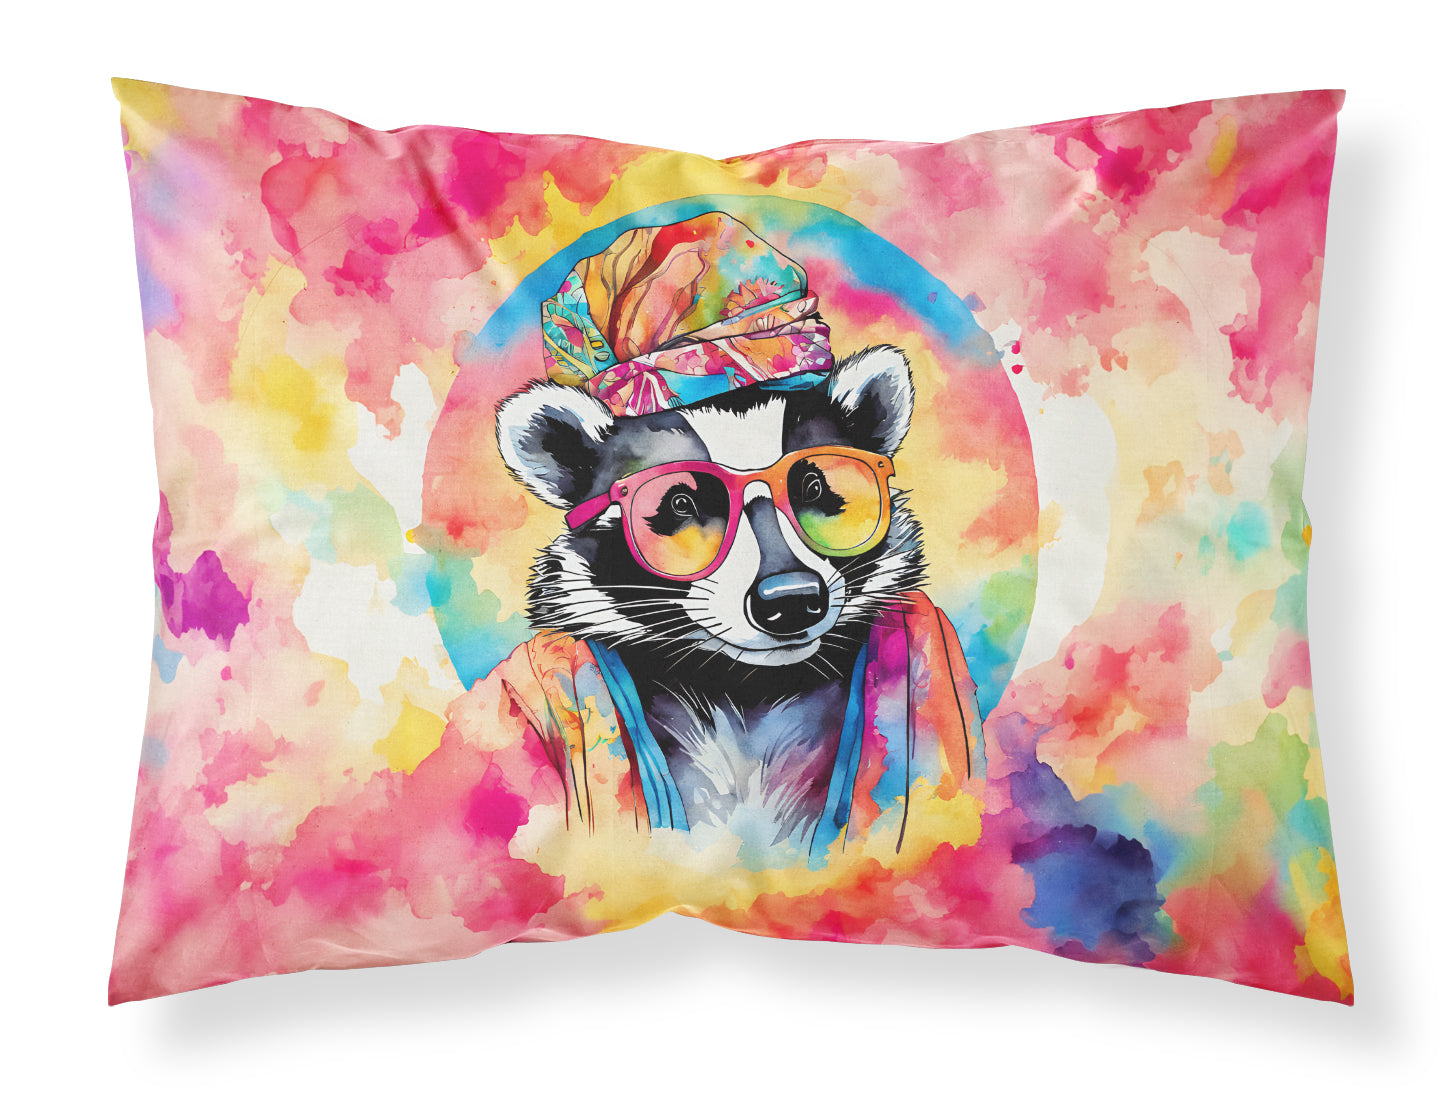 Buy this Hippie Animal Badger Standard Pillowcase